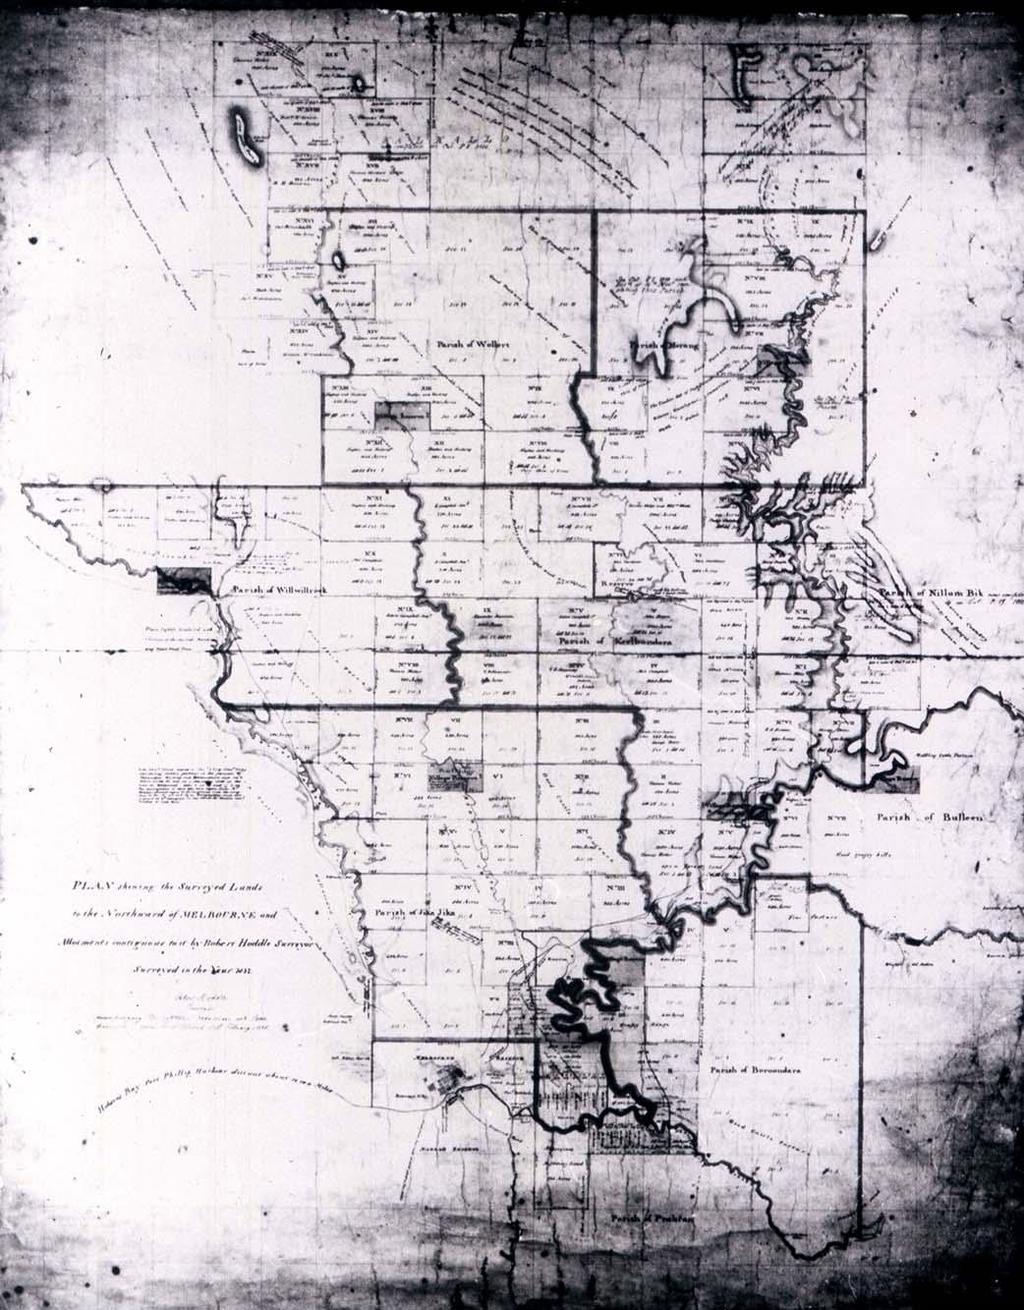 half-drowned or half-baked 11 Robert Hoddle Roll Plan 104, showing lands surveyed north of Melbourne, 1837 [?1838].